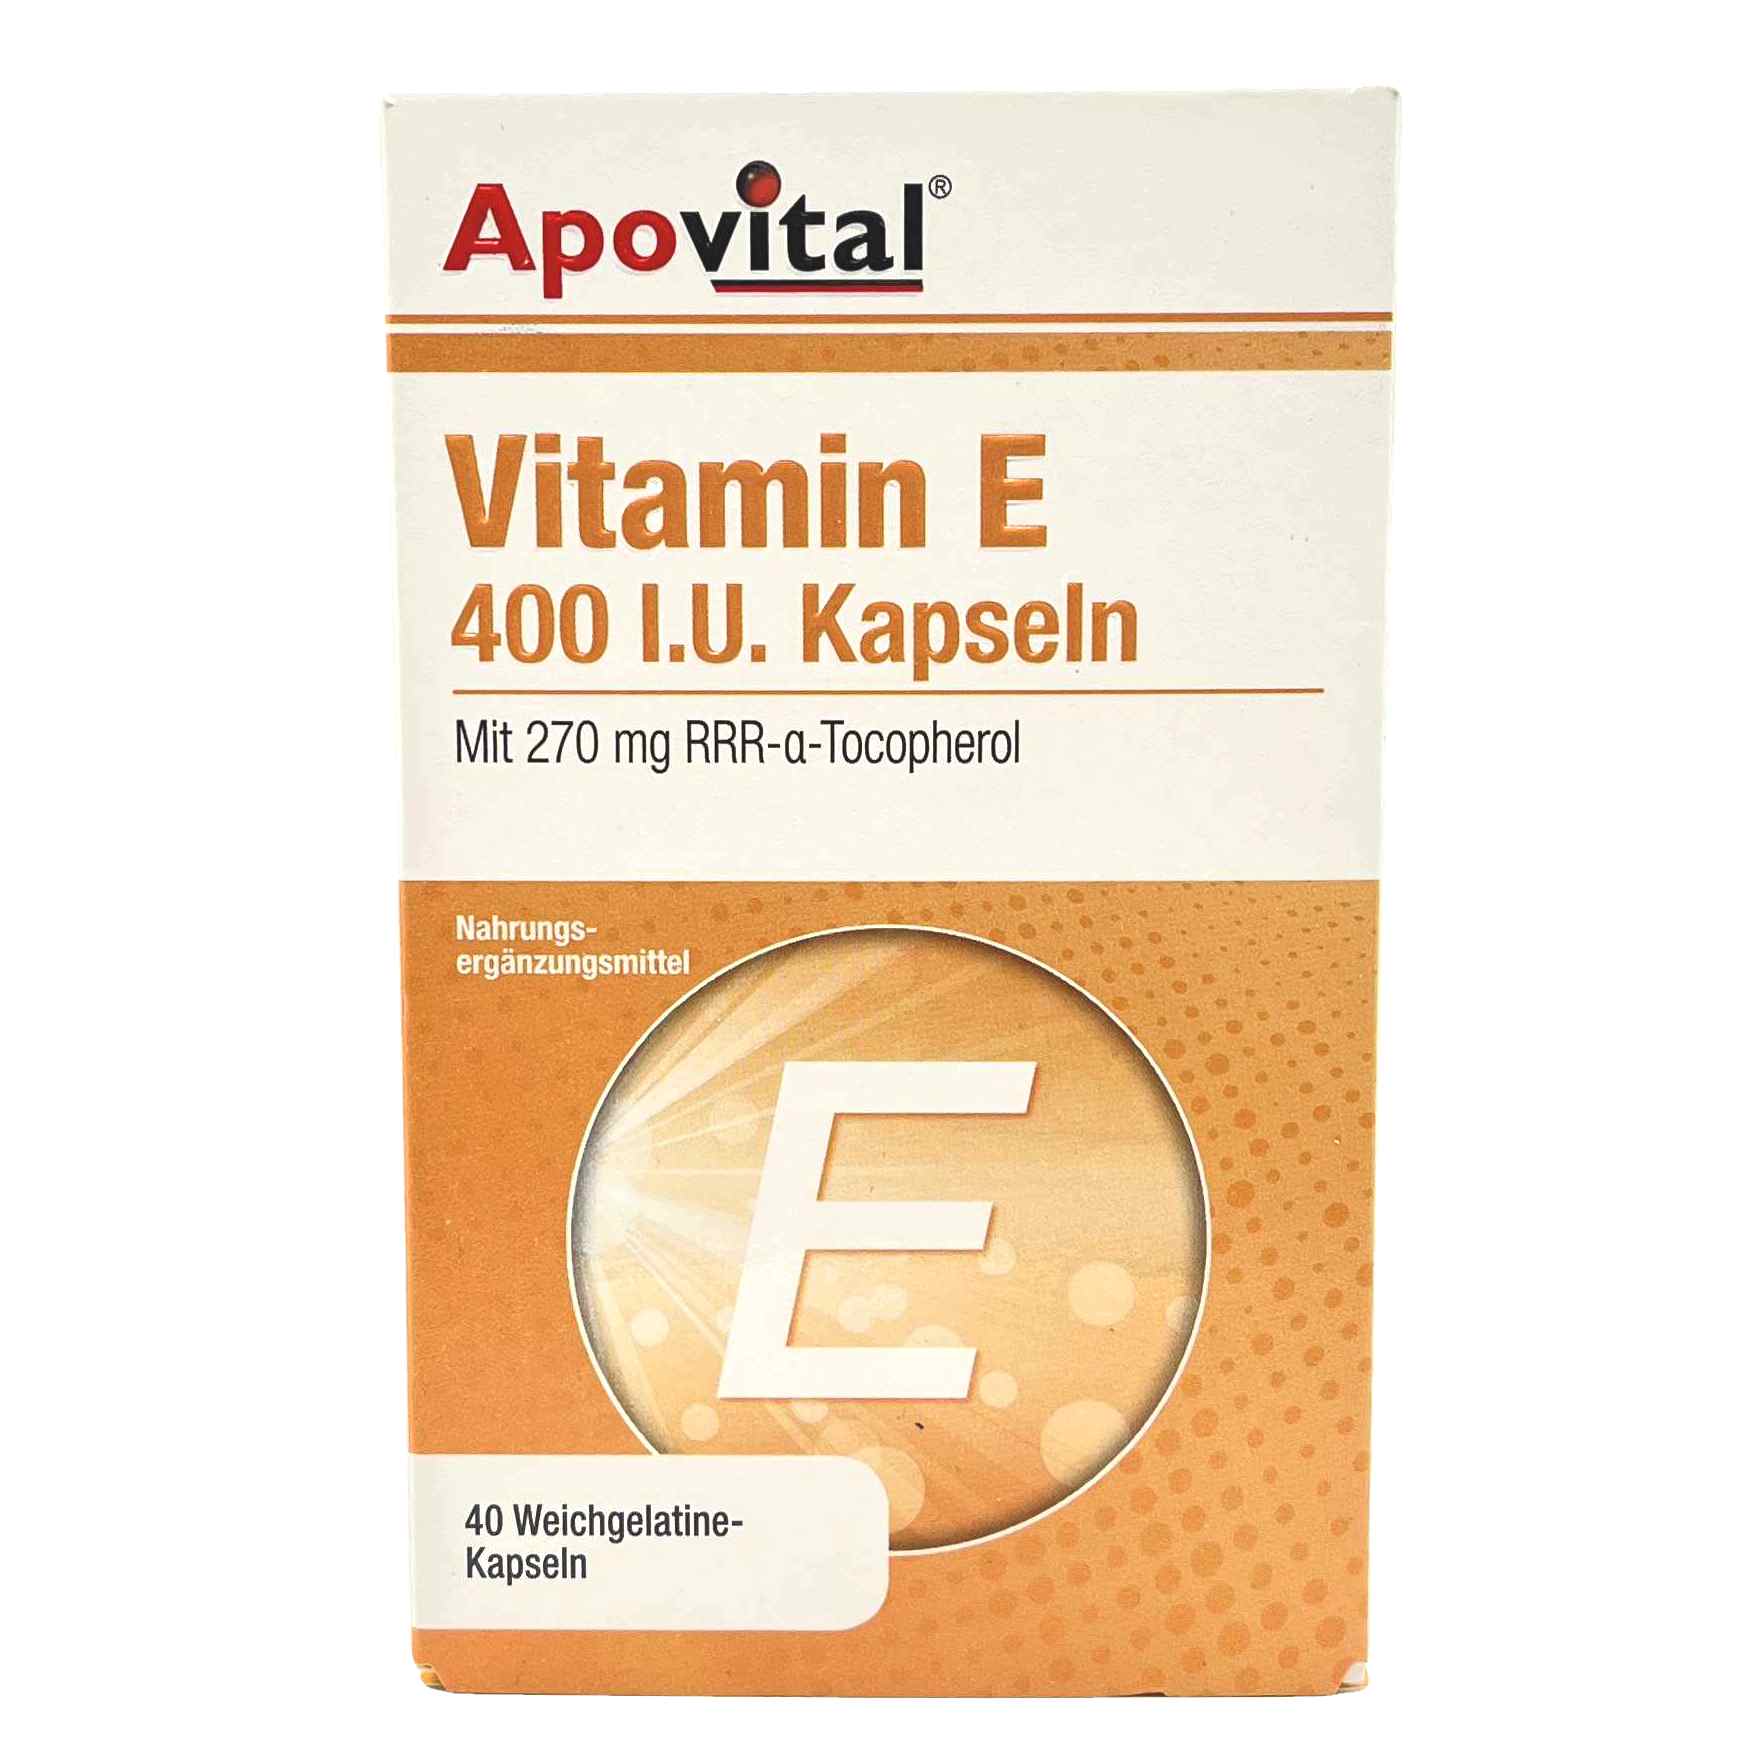 کپسول ژلاتینی نرم ویتامین ای 400 آپوویتال Apovital Vitamin E